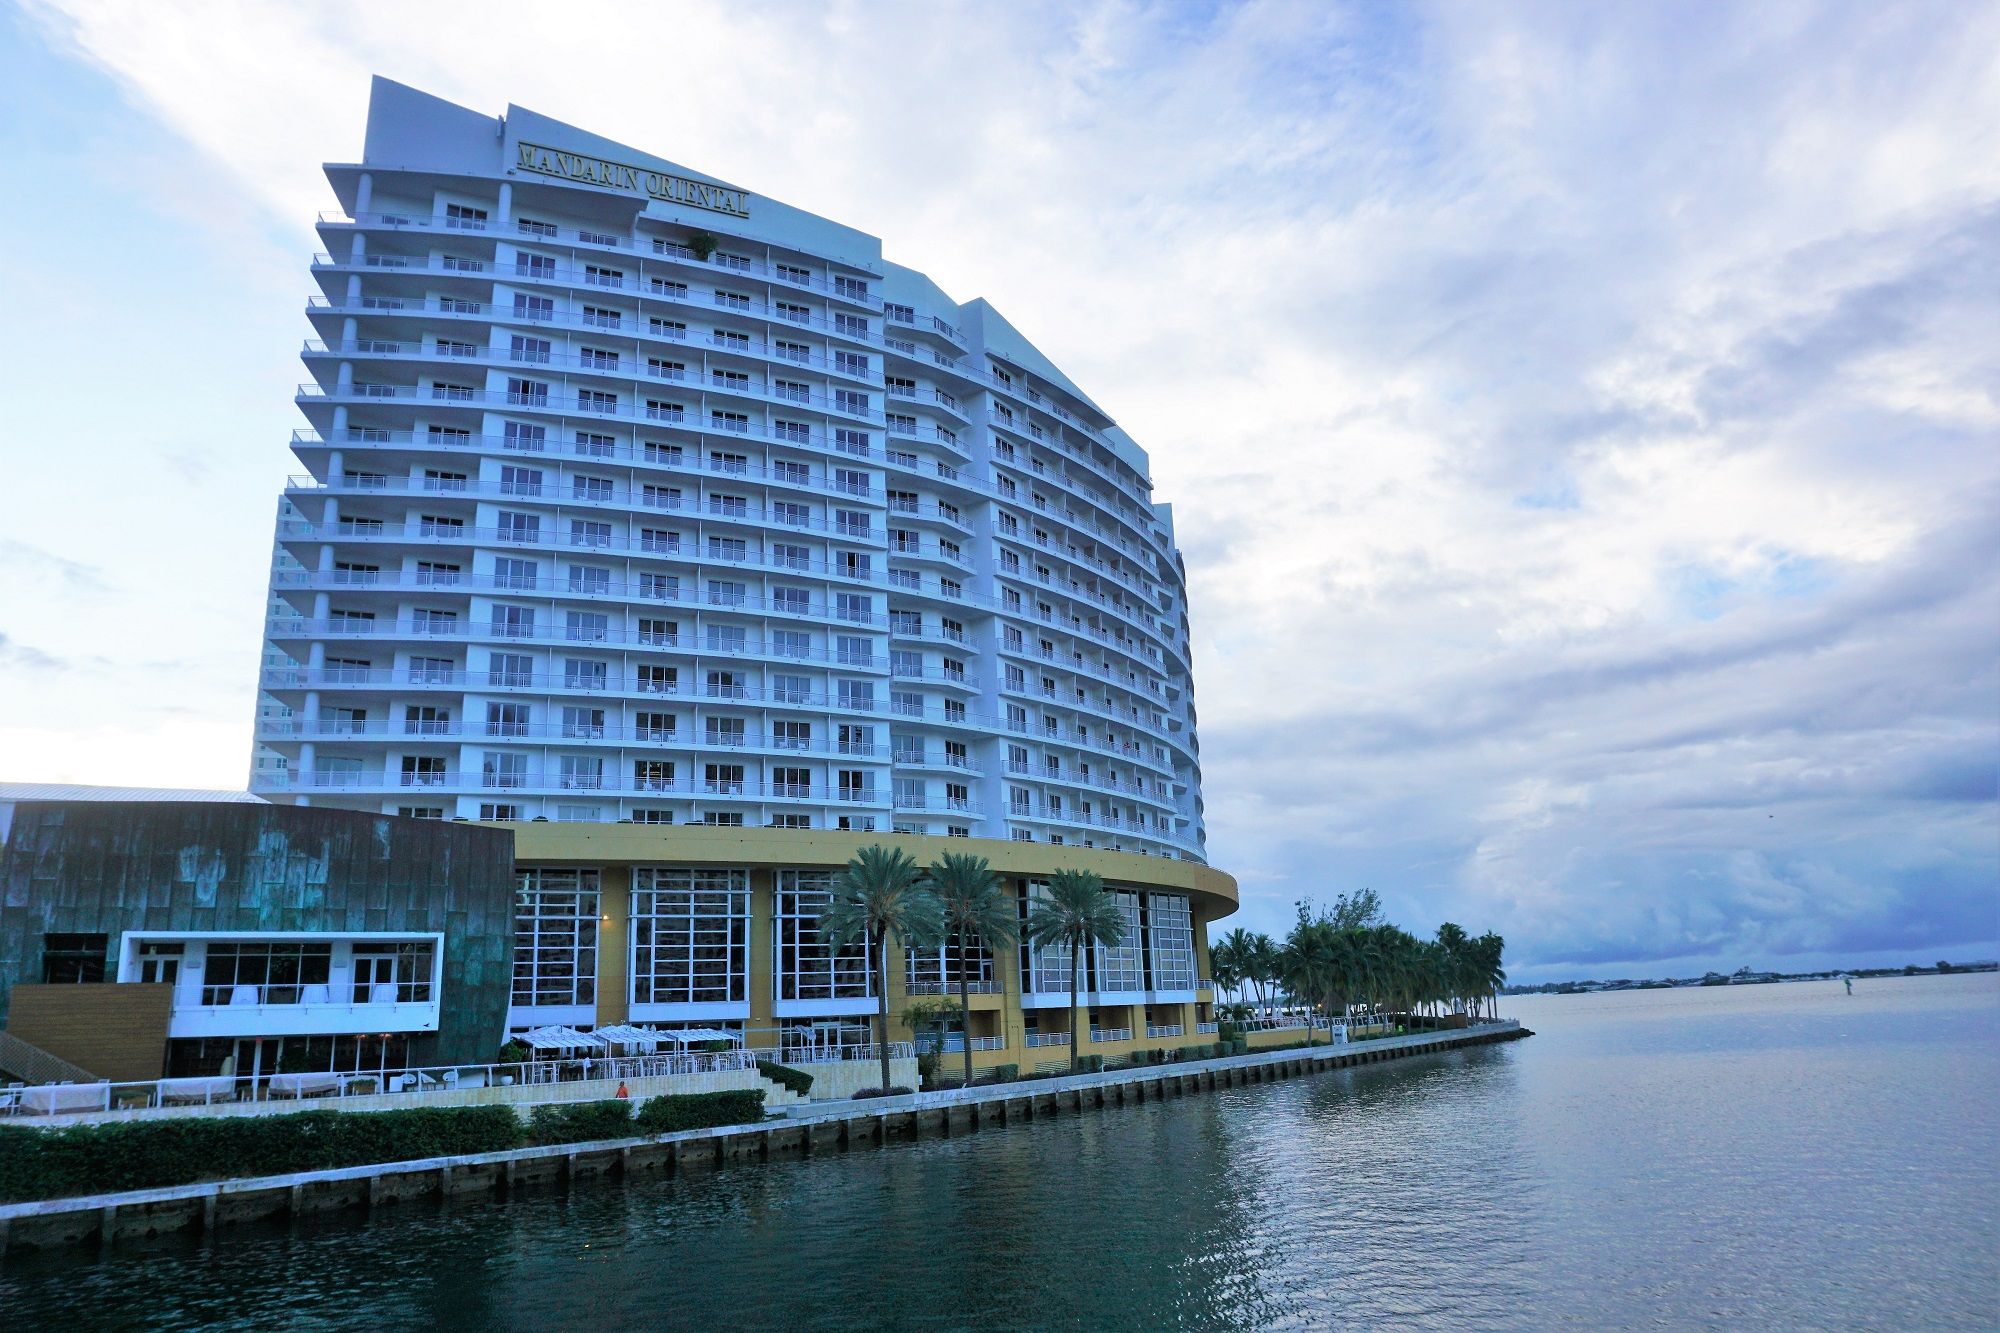 Mandarin Hotel in Miami, FL